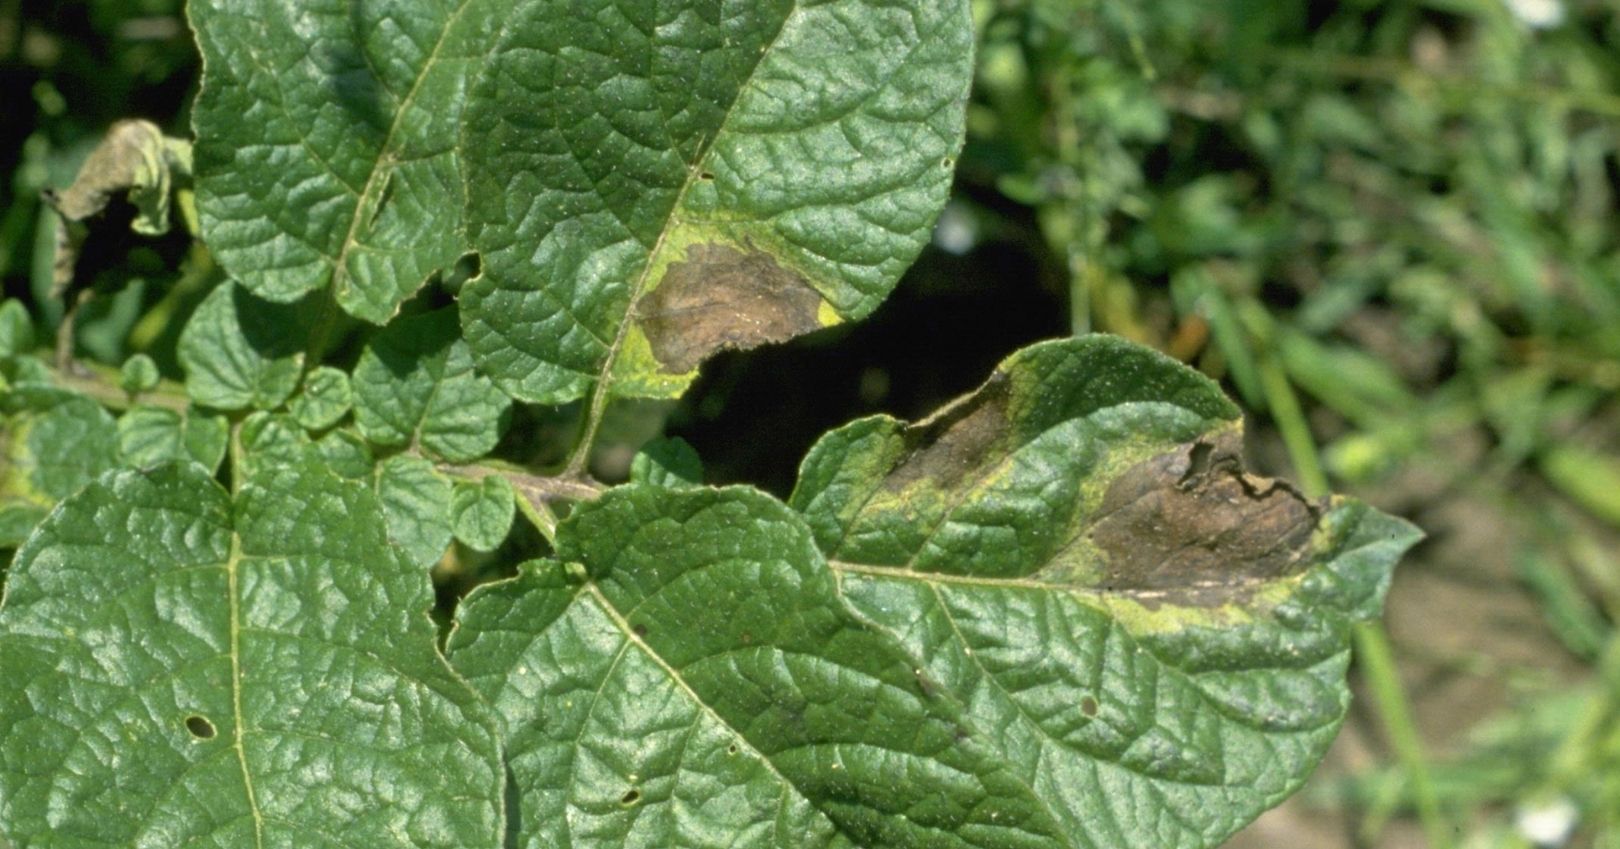 Late Blight Lesions on Potato Foliage